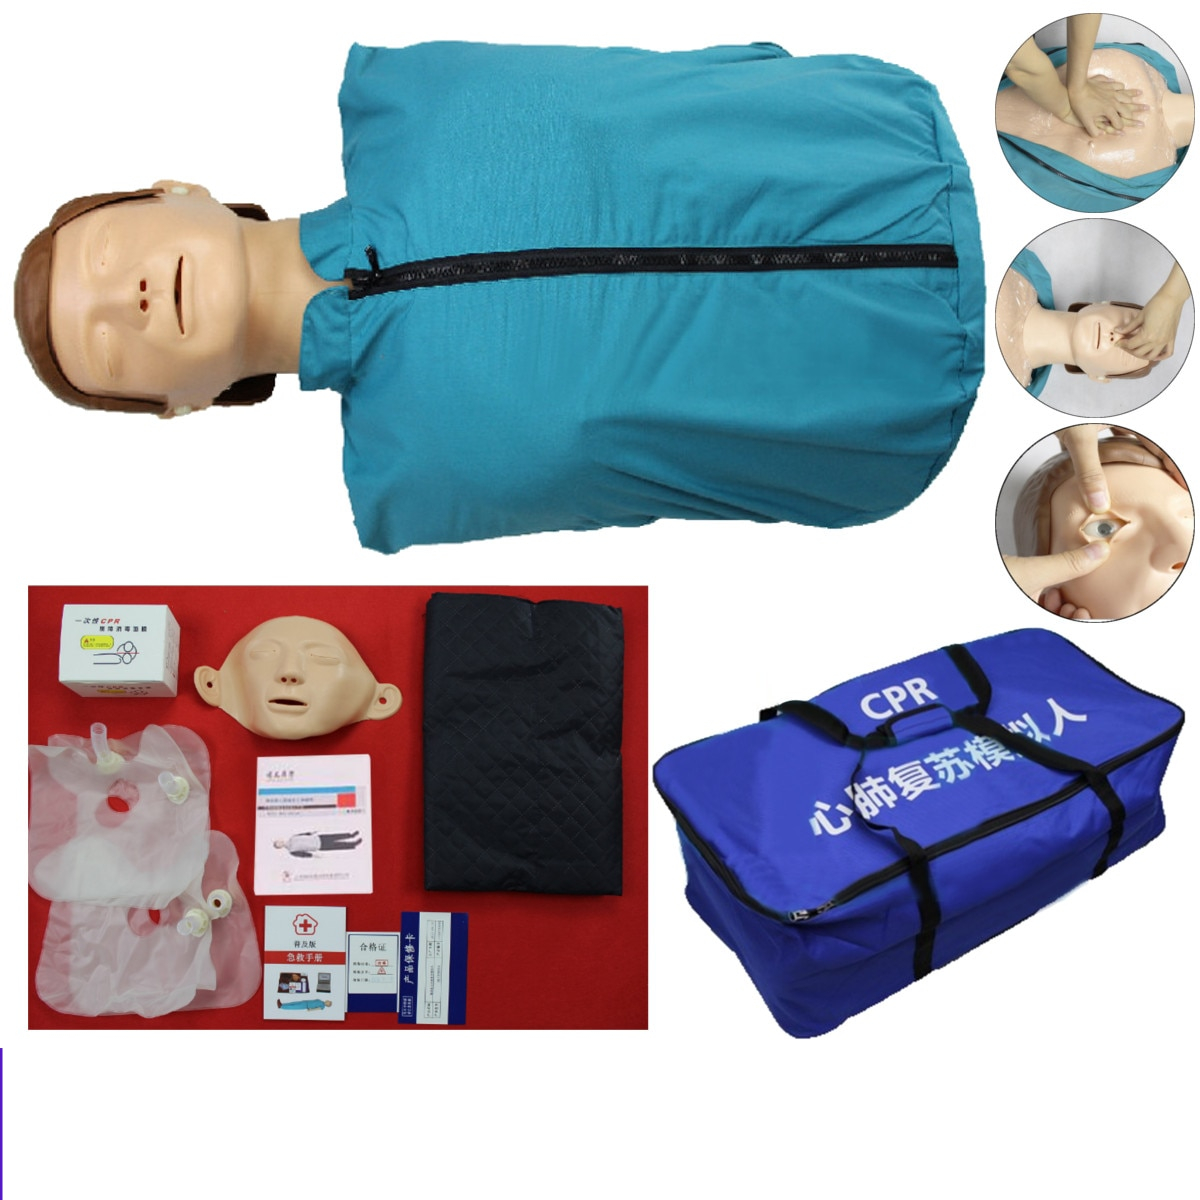 CPR Manikin Medical Training Model